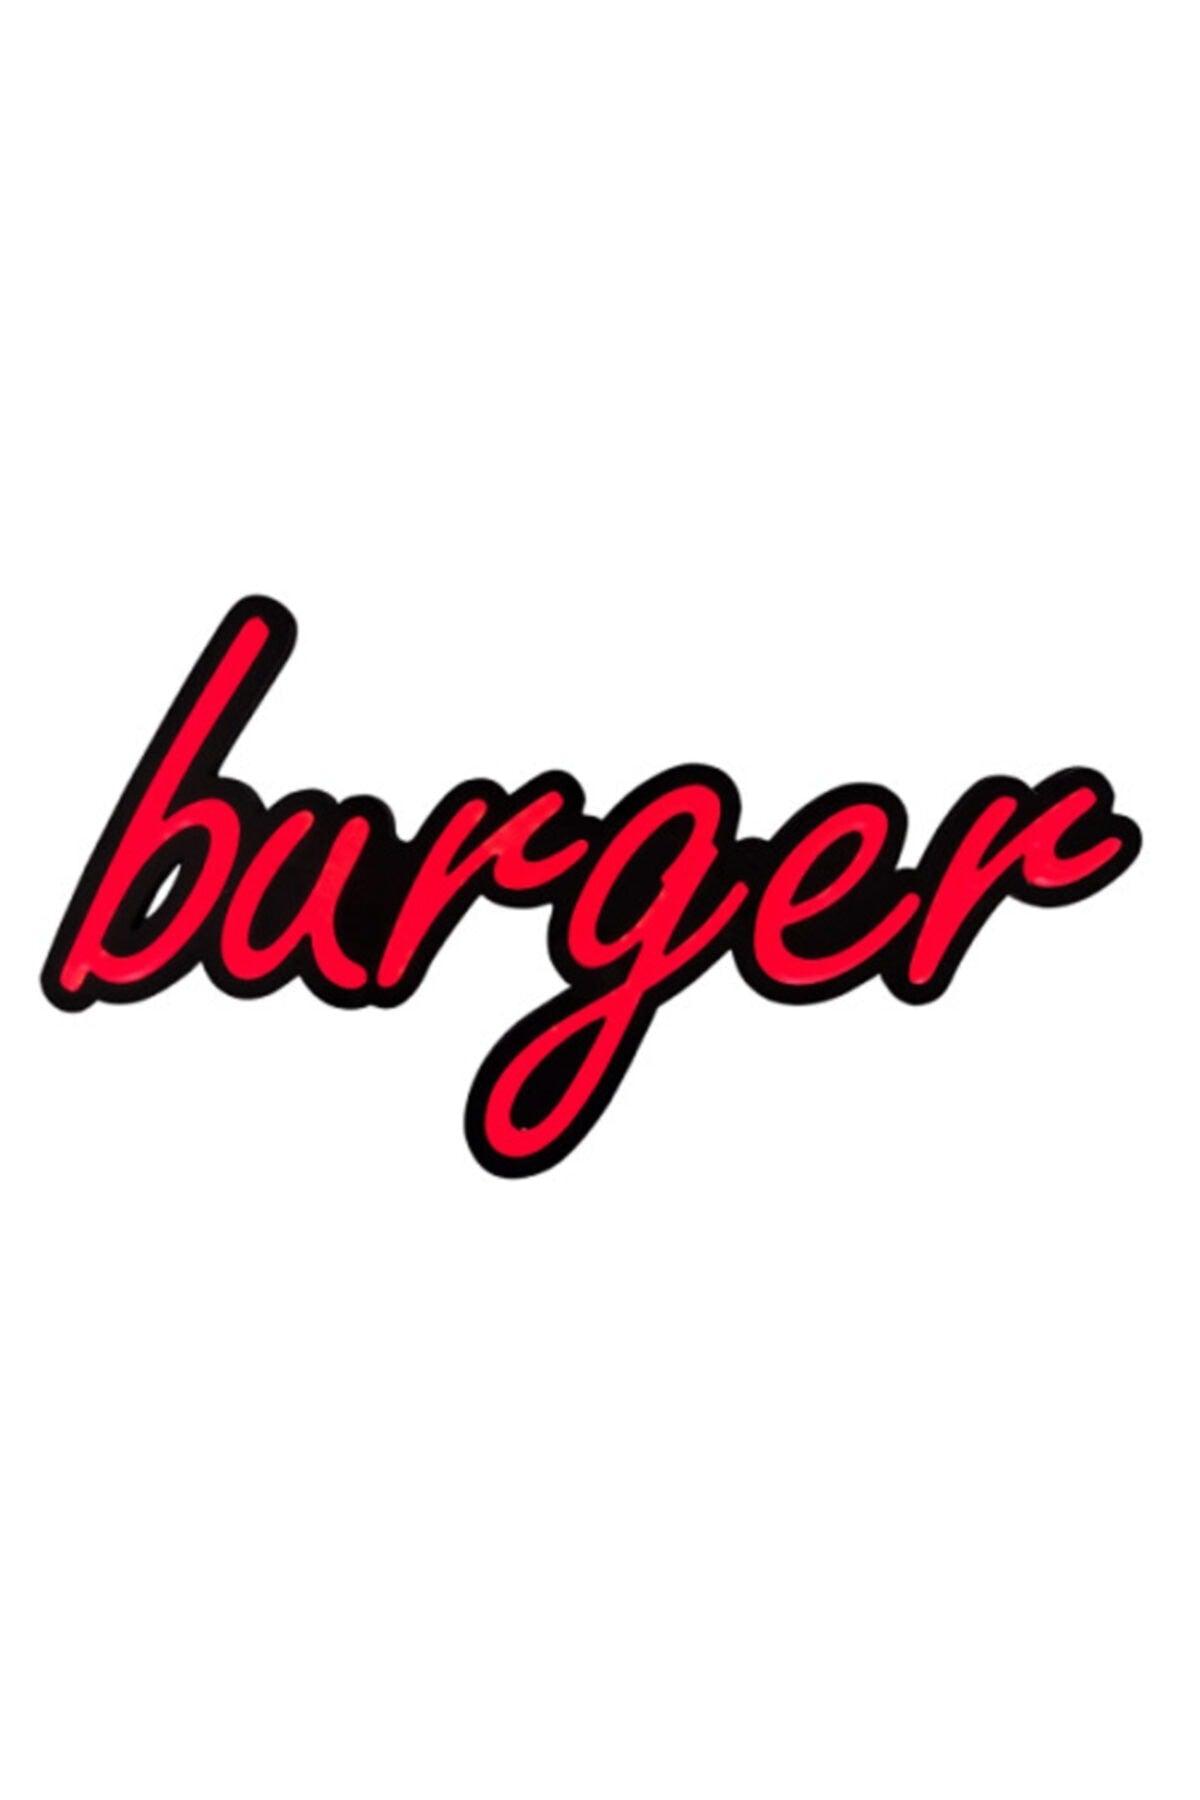 Burger Leon Led Sign Illuminated 41x81cm